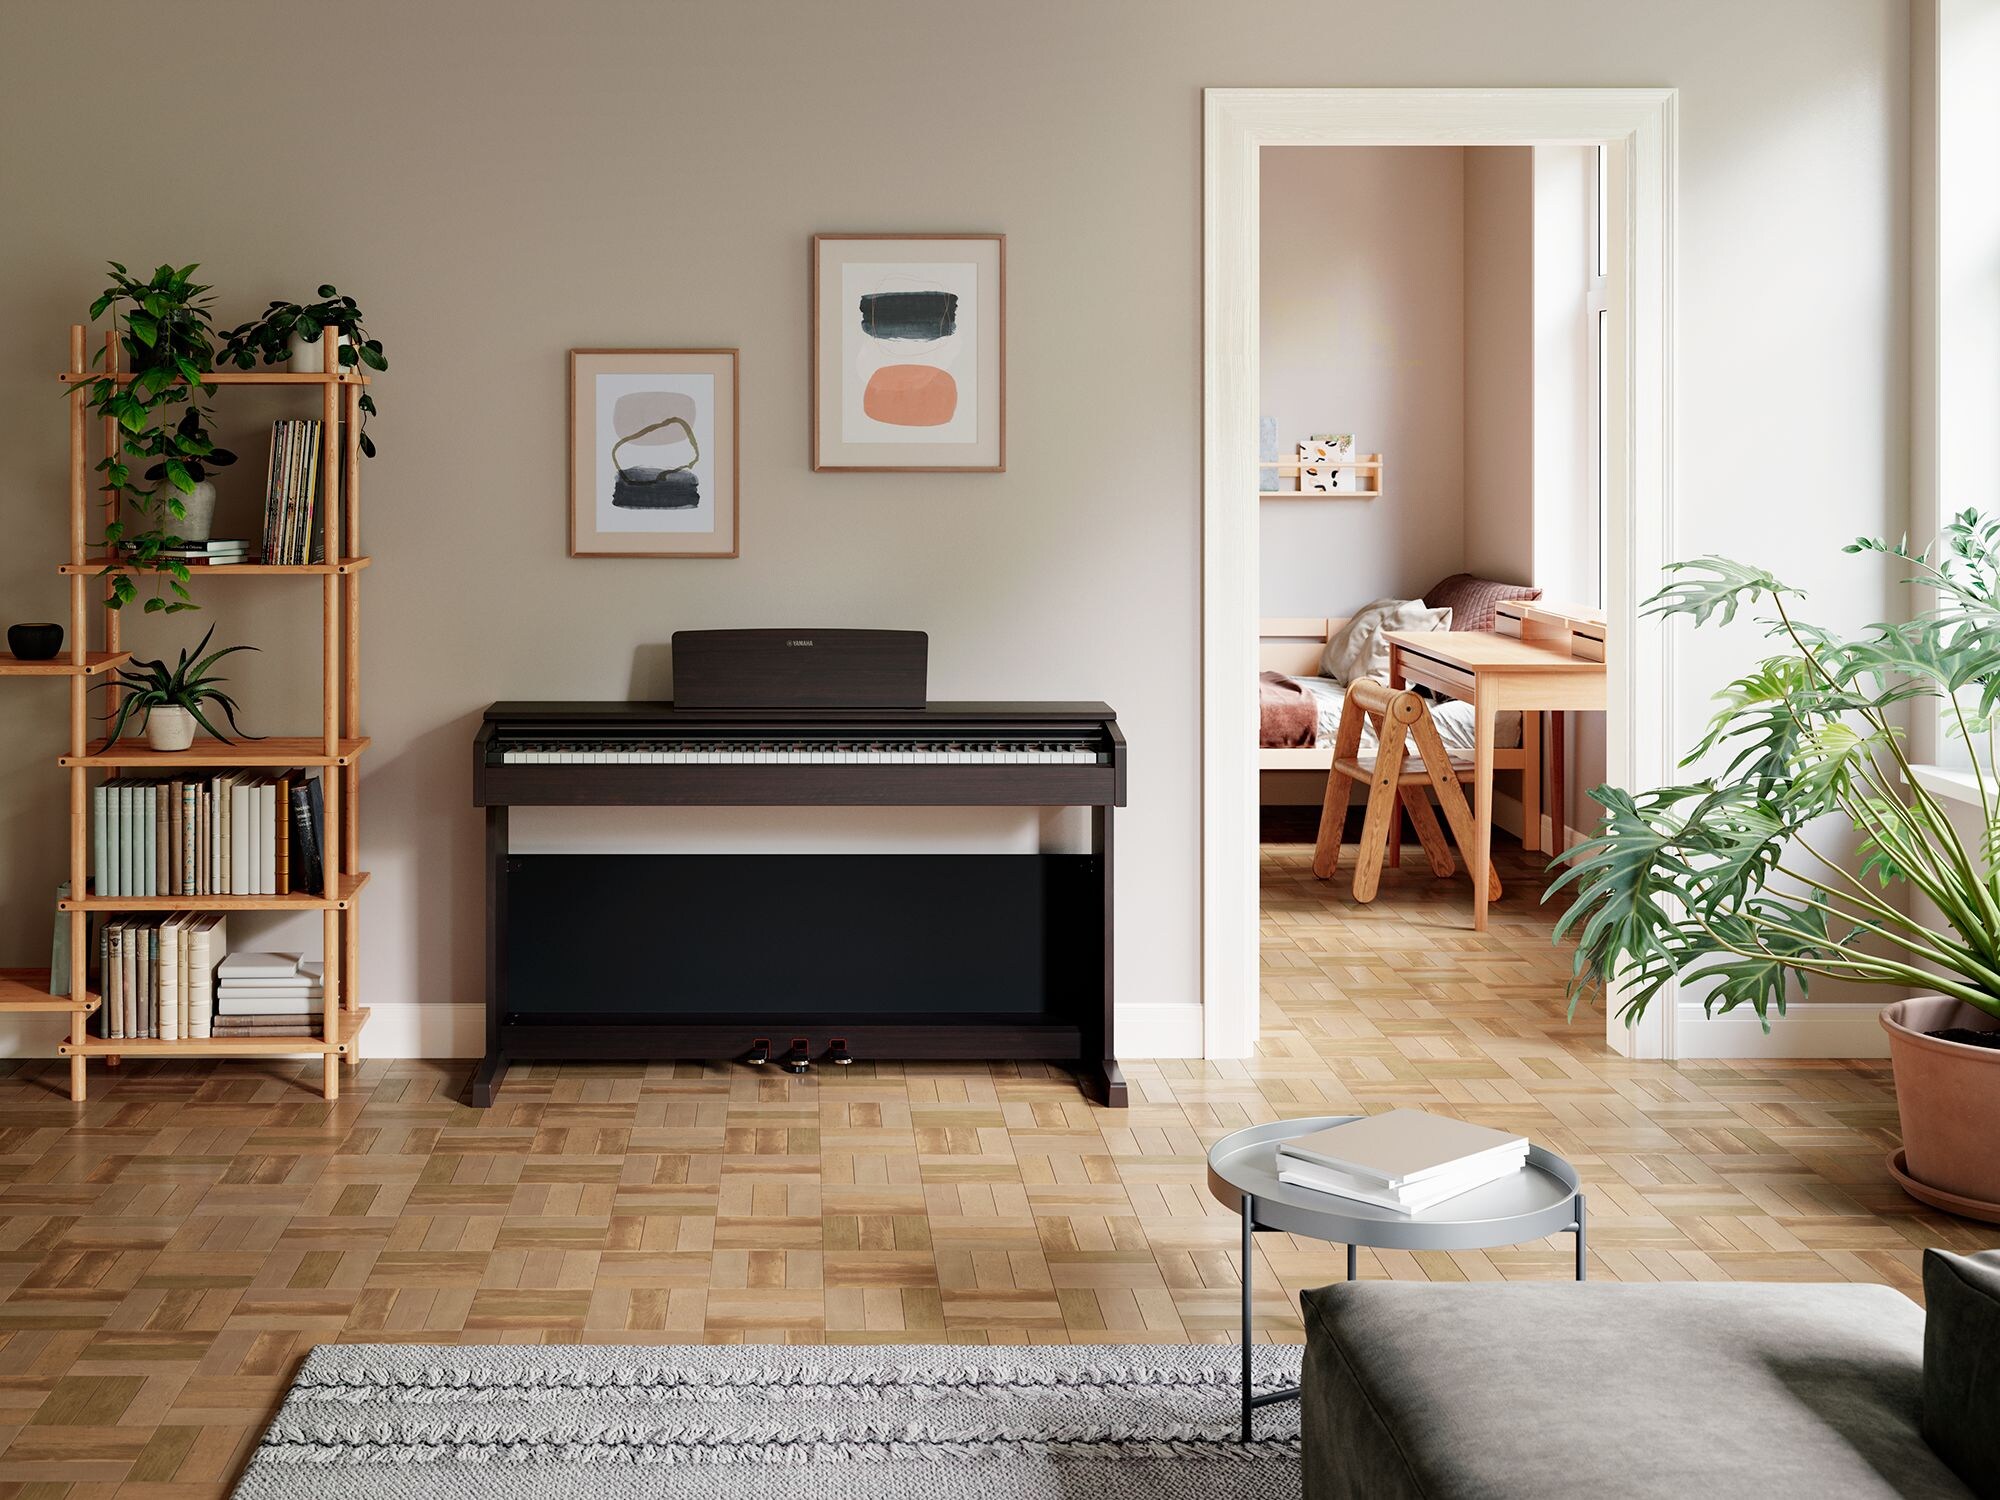 YAMAHA ARIUS YDP-S55 Piano numérique meuble